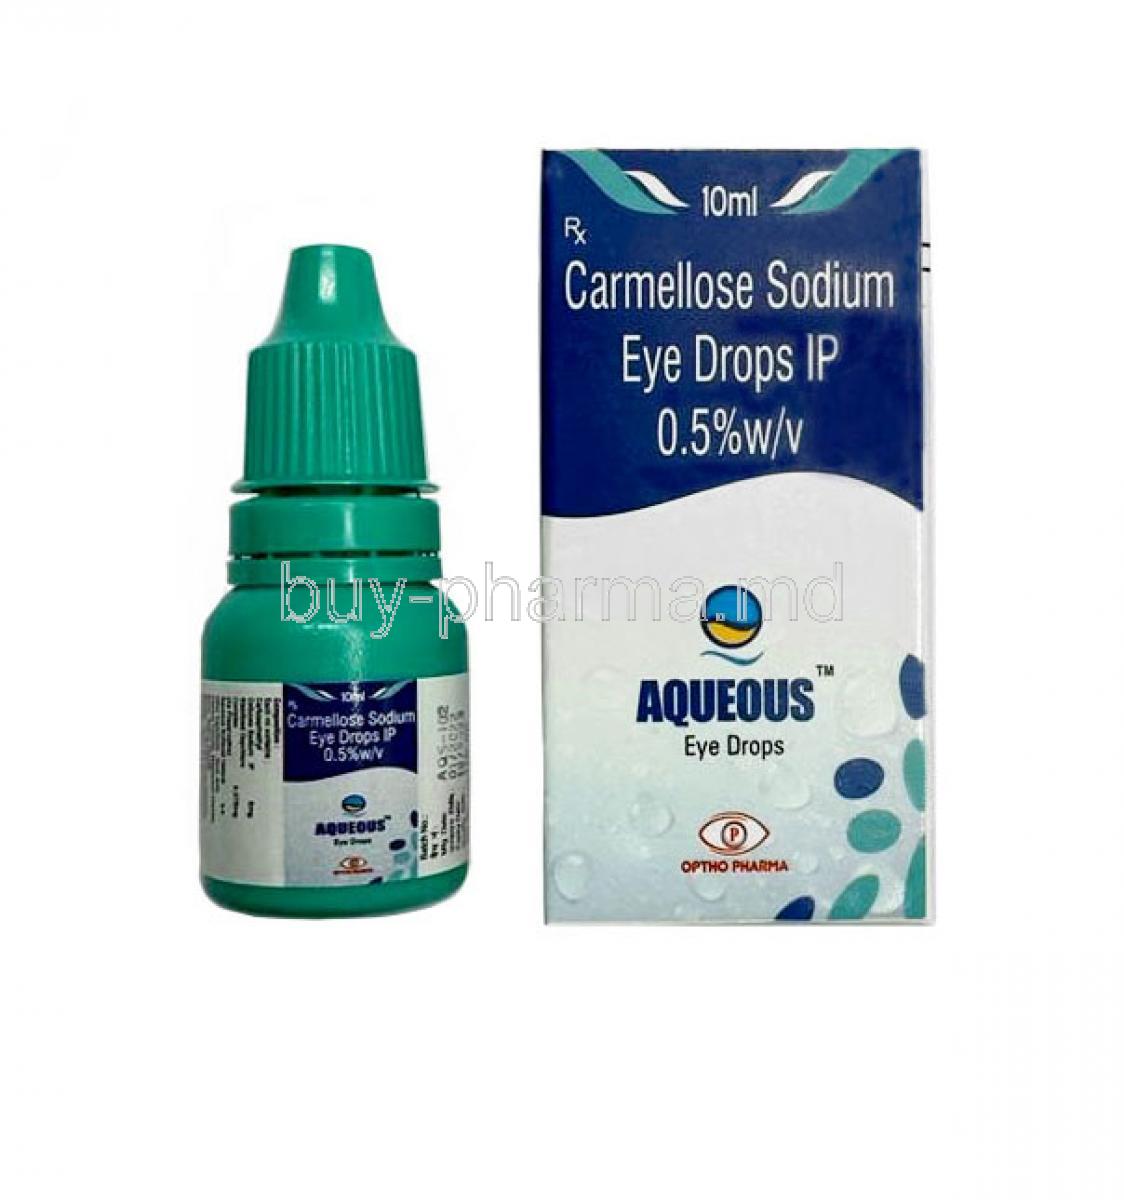 Aqueous Eye Drop, Carboxymethylcellulose 0.5% w/v, Eye Drop 10mL, Optho Pharma Pvt Ltd, Box, Bottle